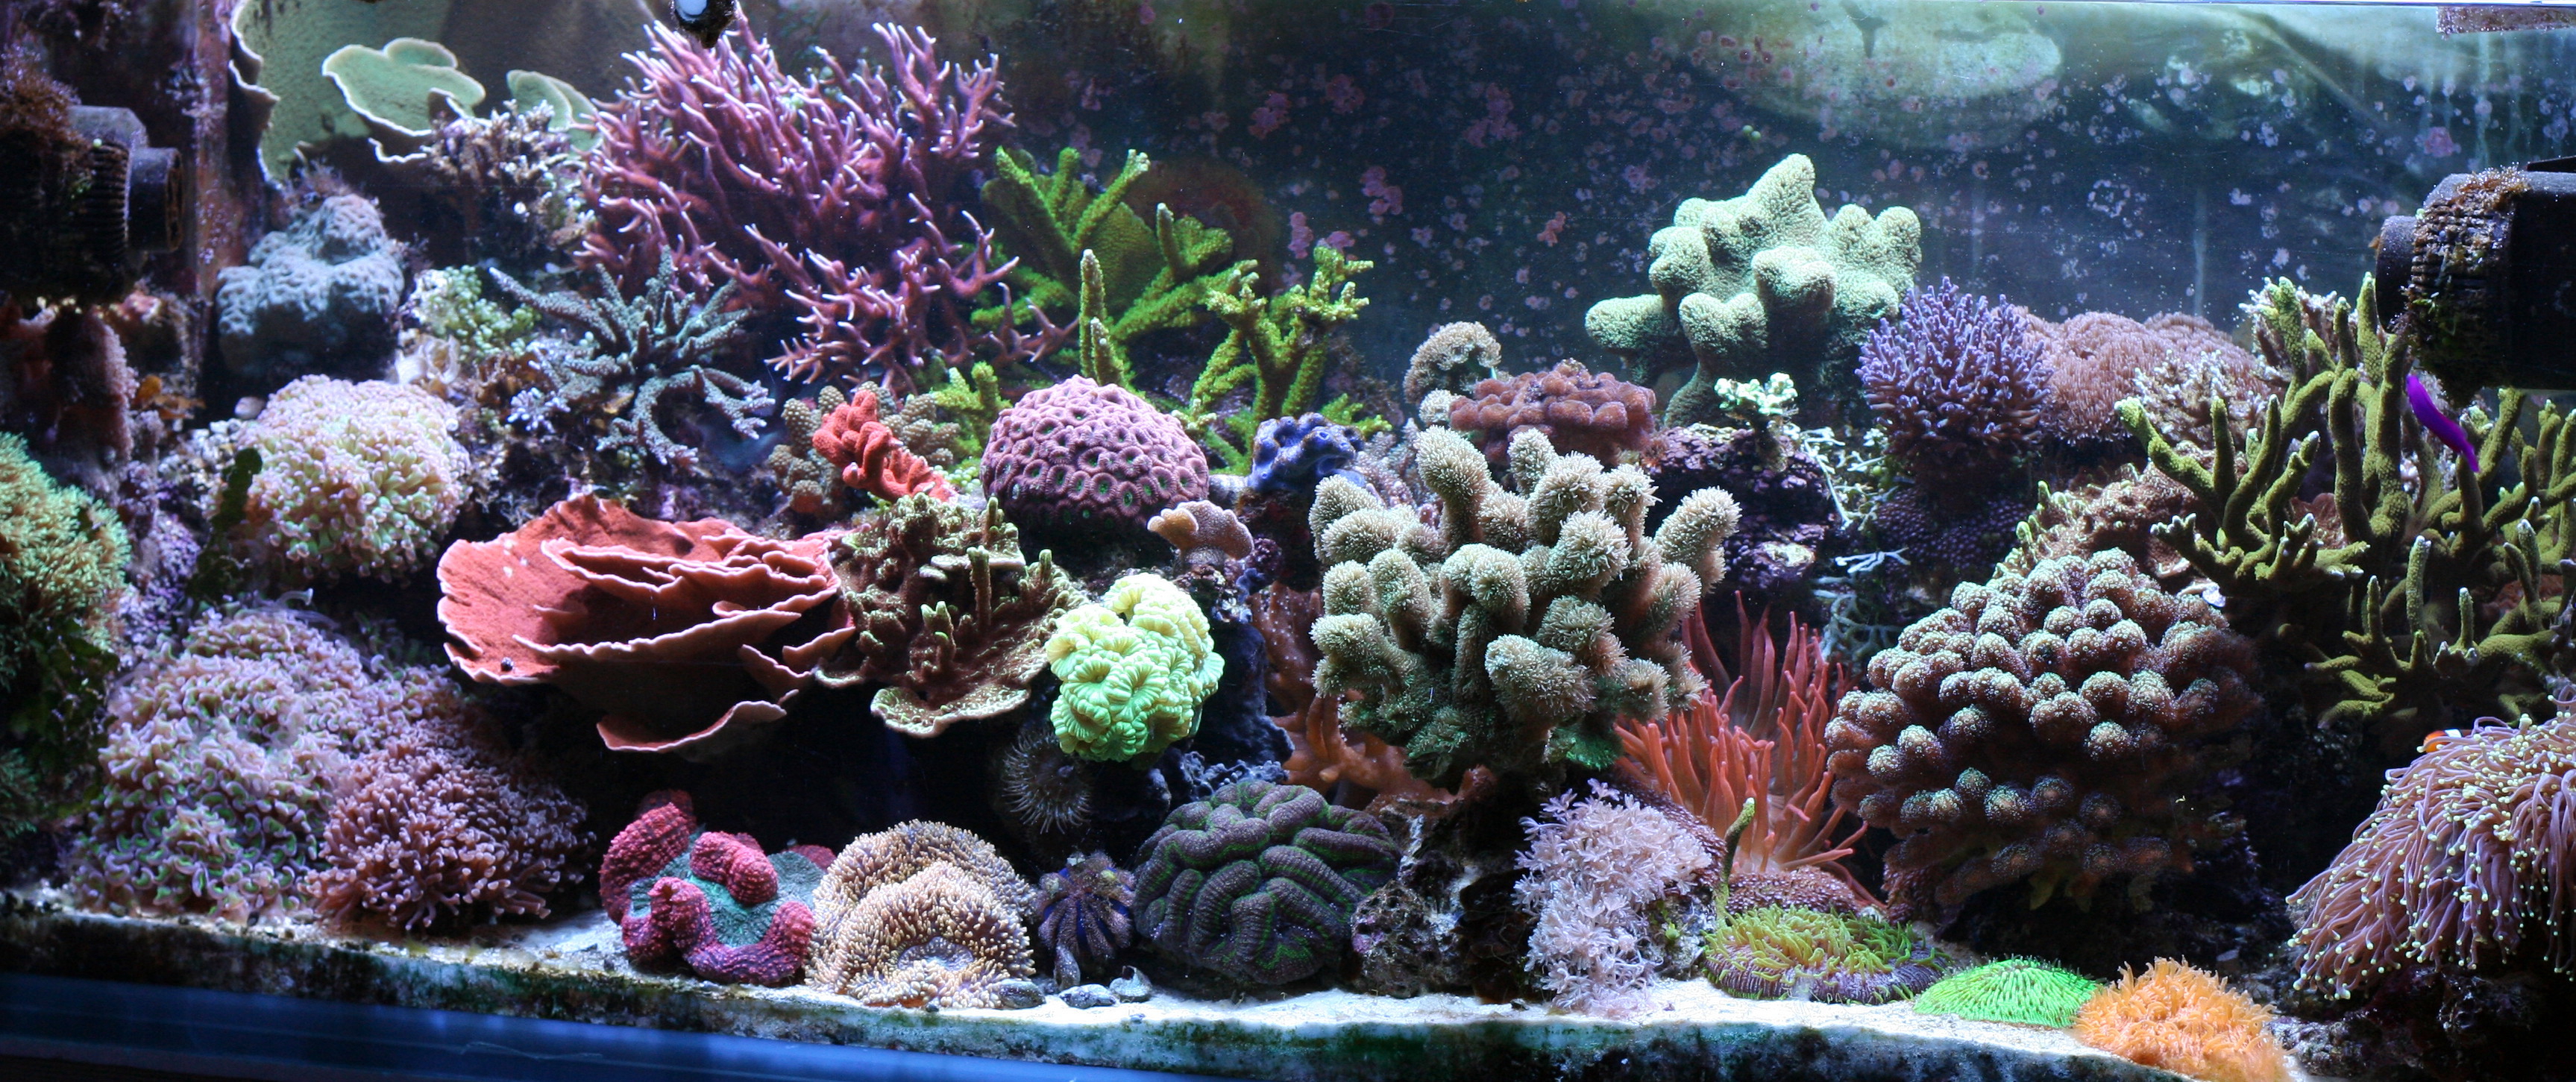 Tiedosto Reef Aquarium At Home Jpg Wikipedia